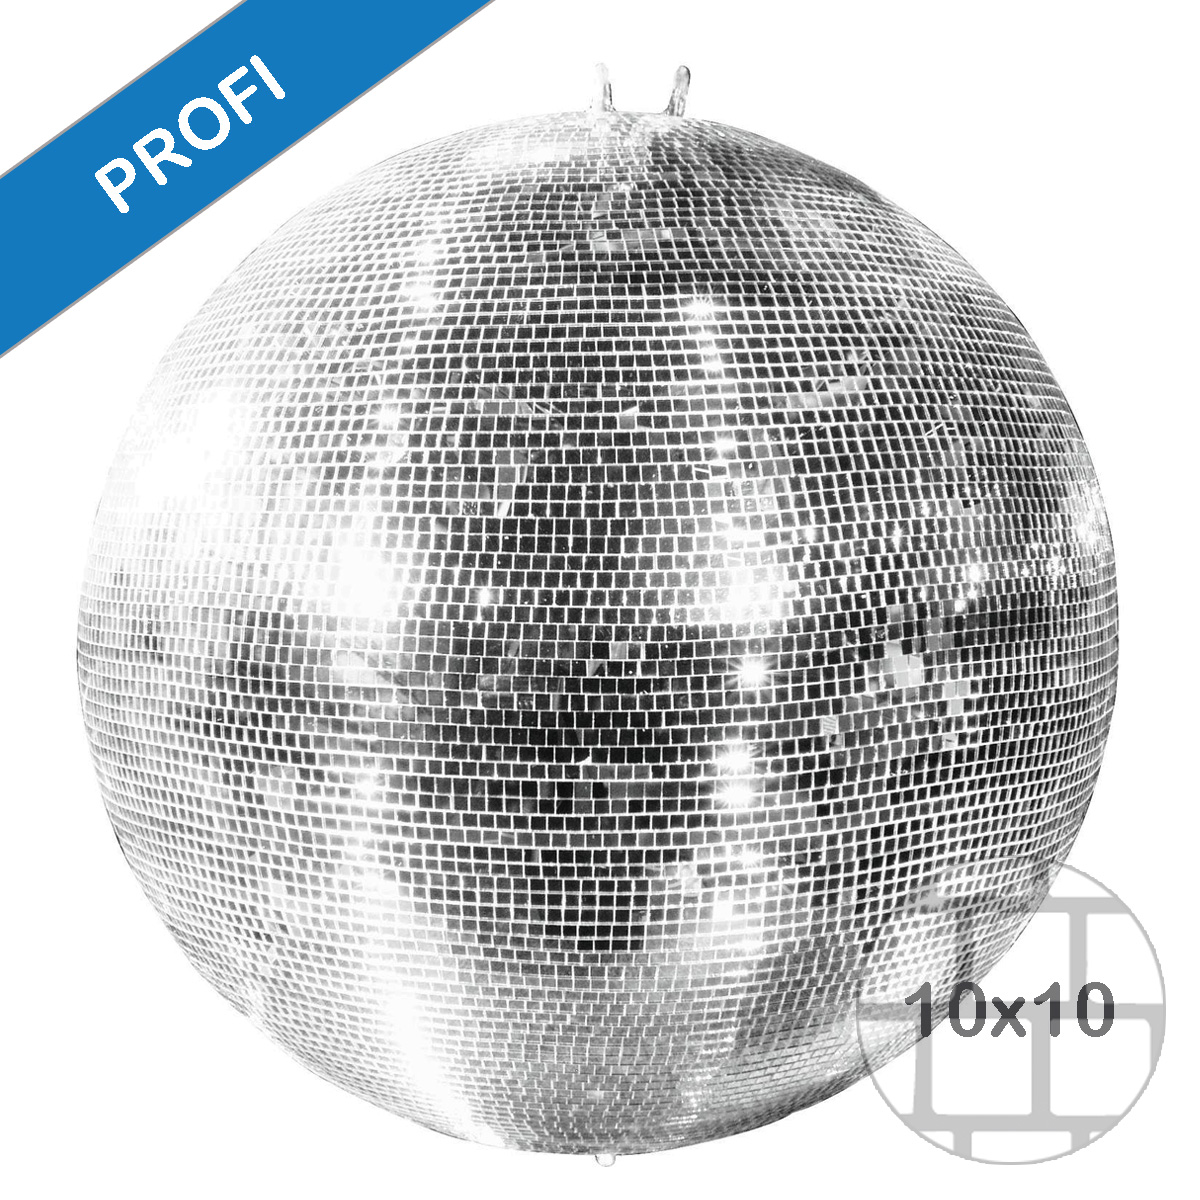 Spiegelkugel 150cm silber chrom- Diskokugel (Discokugel) Party Lichteffekt - Echtglas - mirrorball safety silver chrome color 1